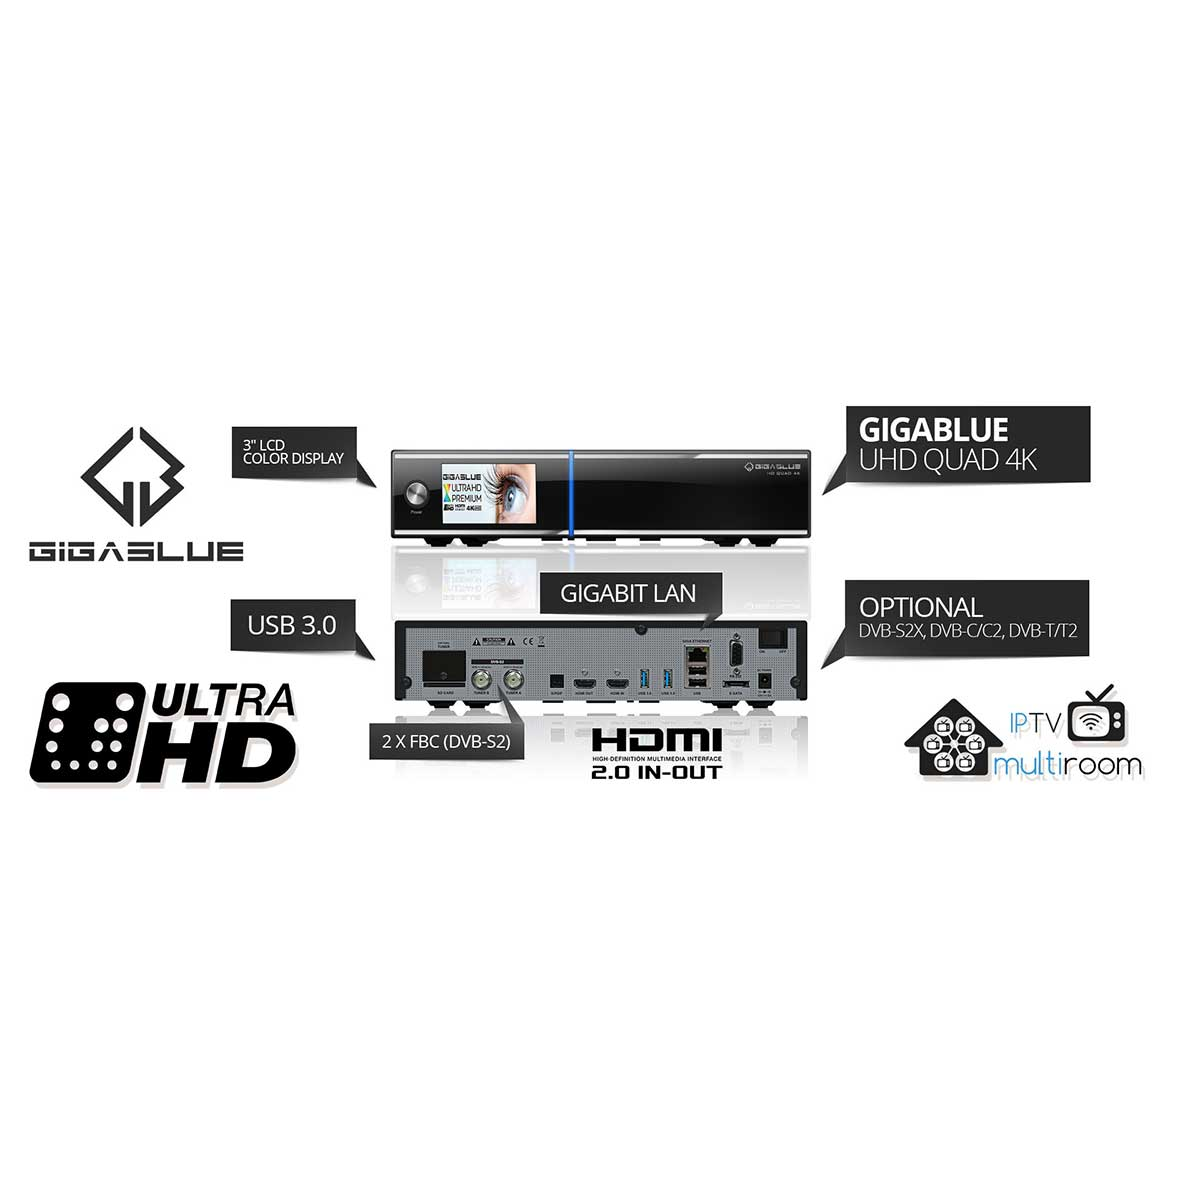 schwarz) Twin DVB-S2, Tuner, Sat-Receiver UHD (HDTV, 4K PVR-Funktion=optional, DVB-S, QUAD GIGABLUE